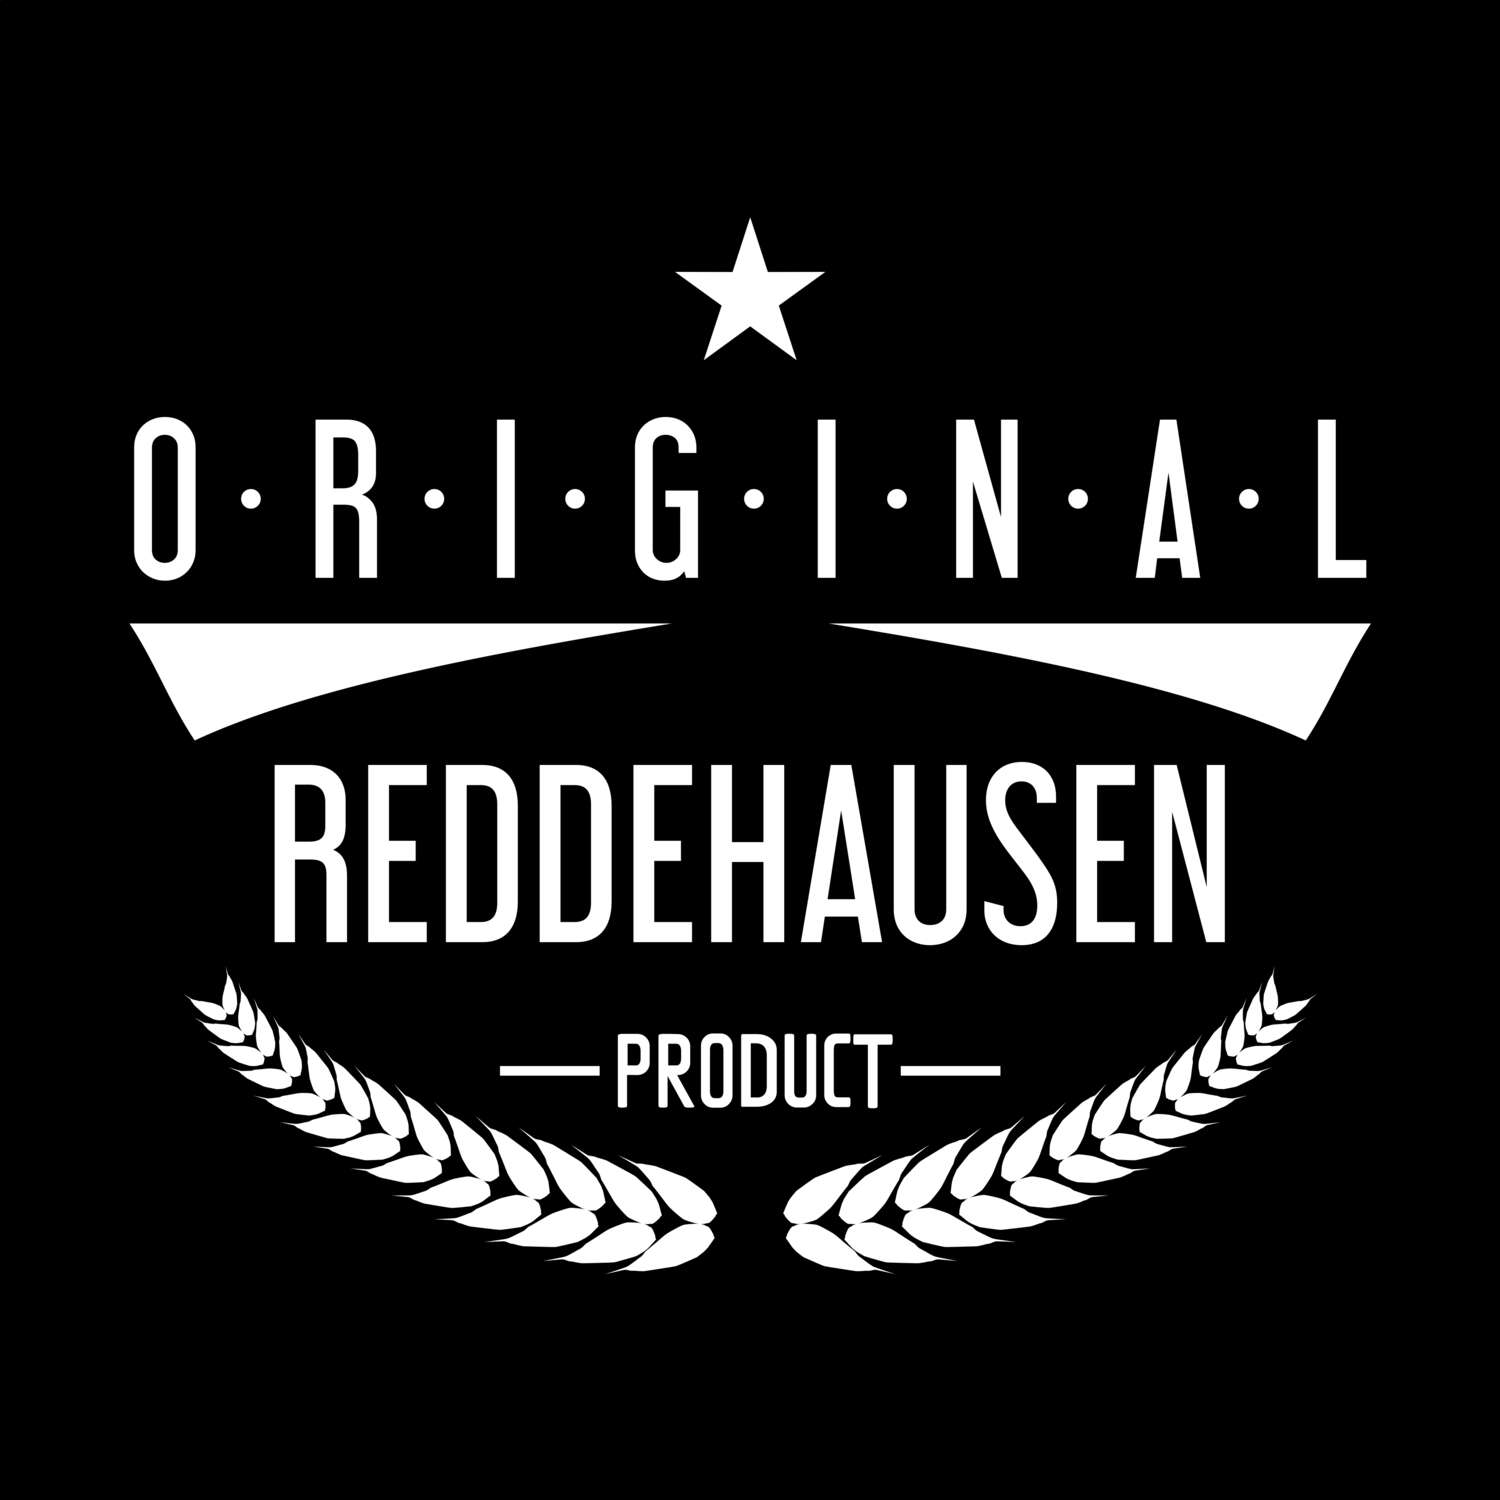 Reddehausen T-Shirt »Original Product«